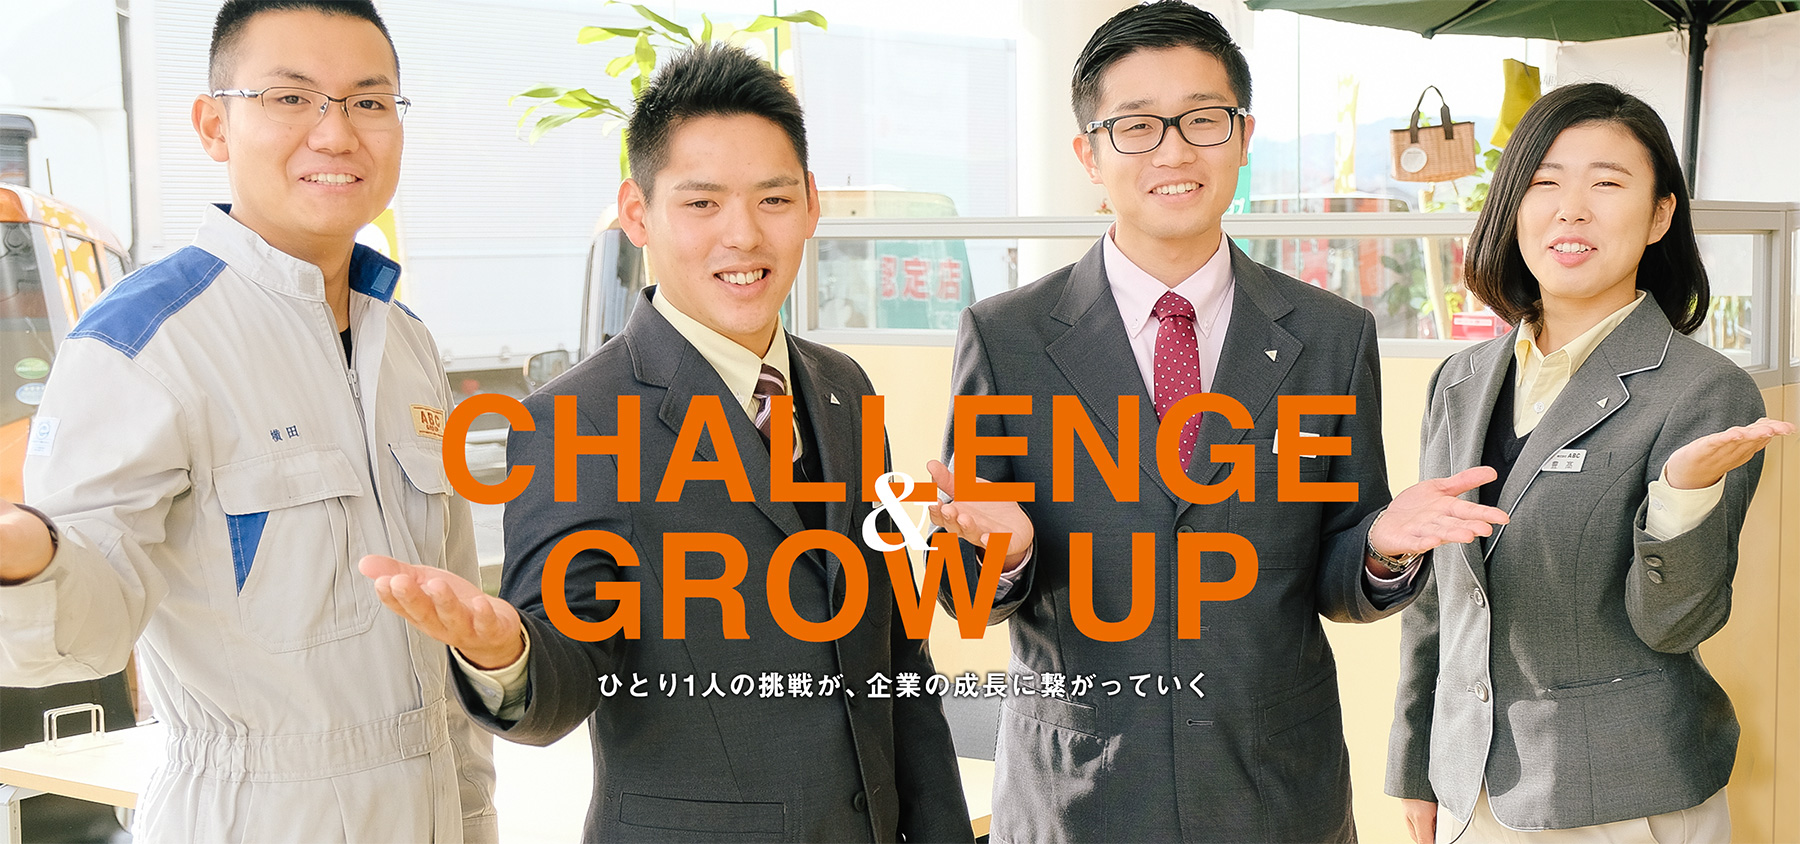 CHALLENGE and GROW UP ひとり1人の挑戦が、企業の成長に繋がっていく